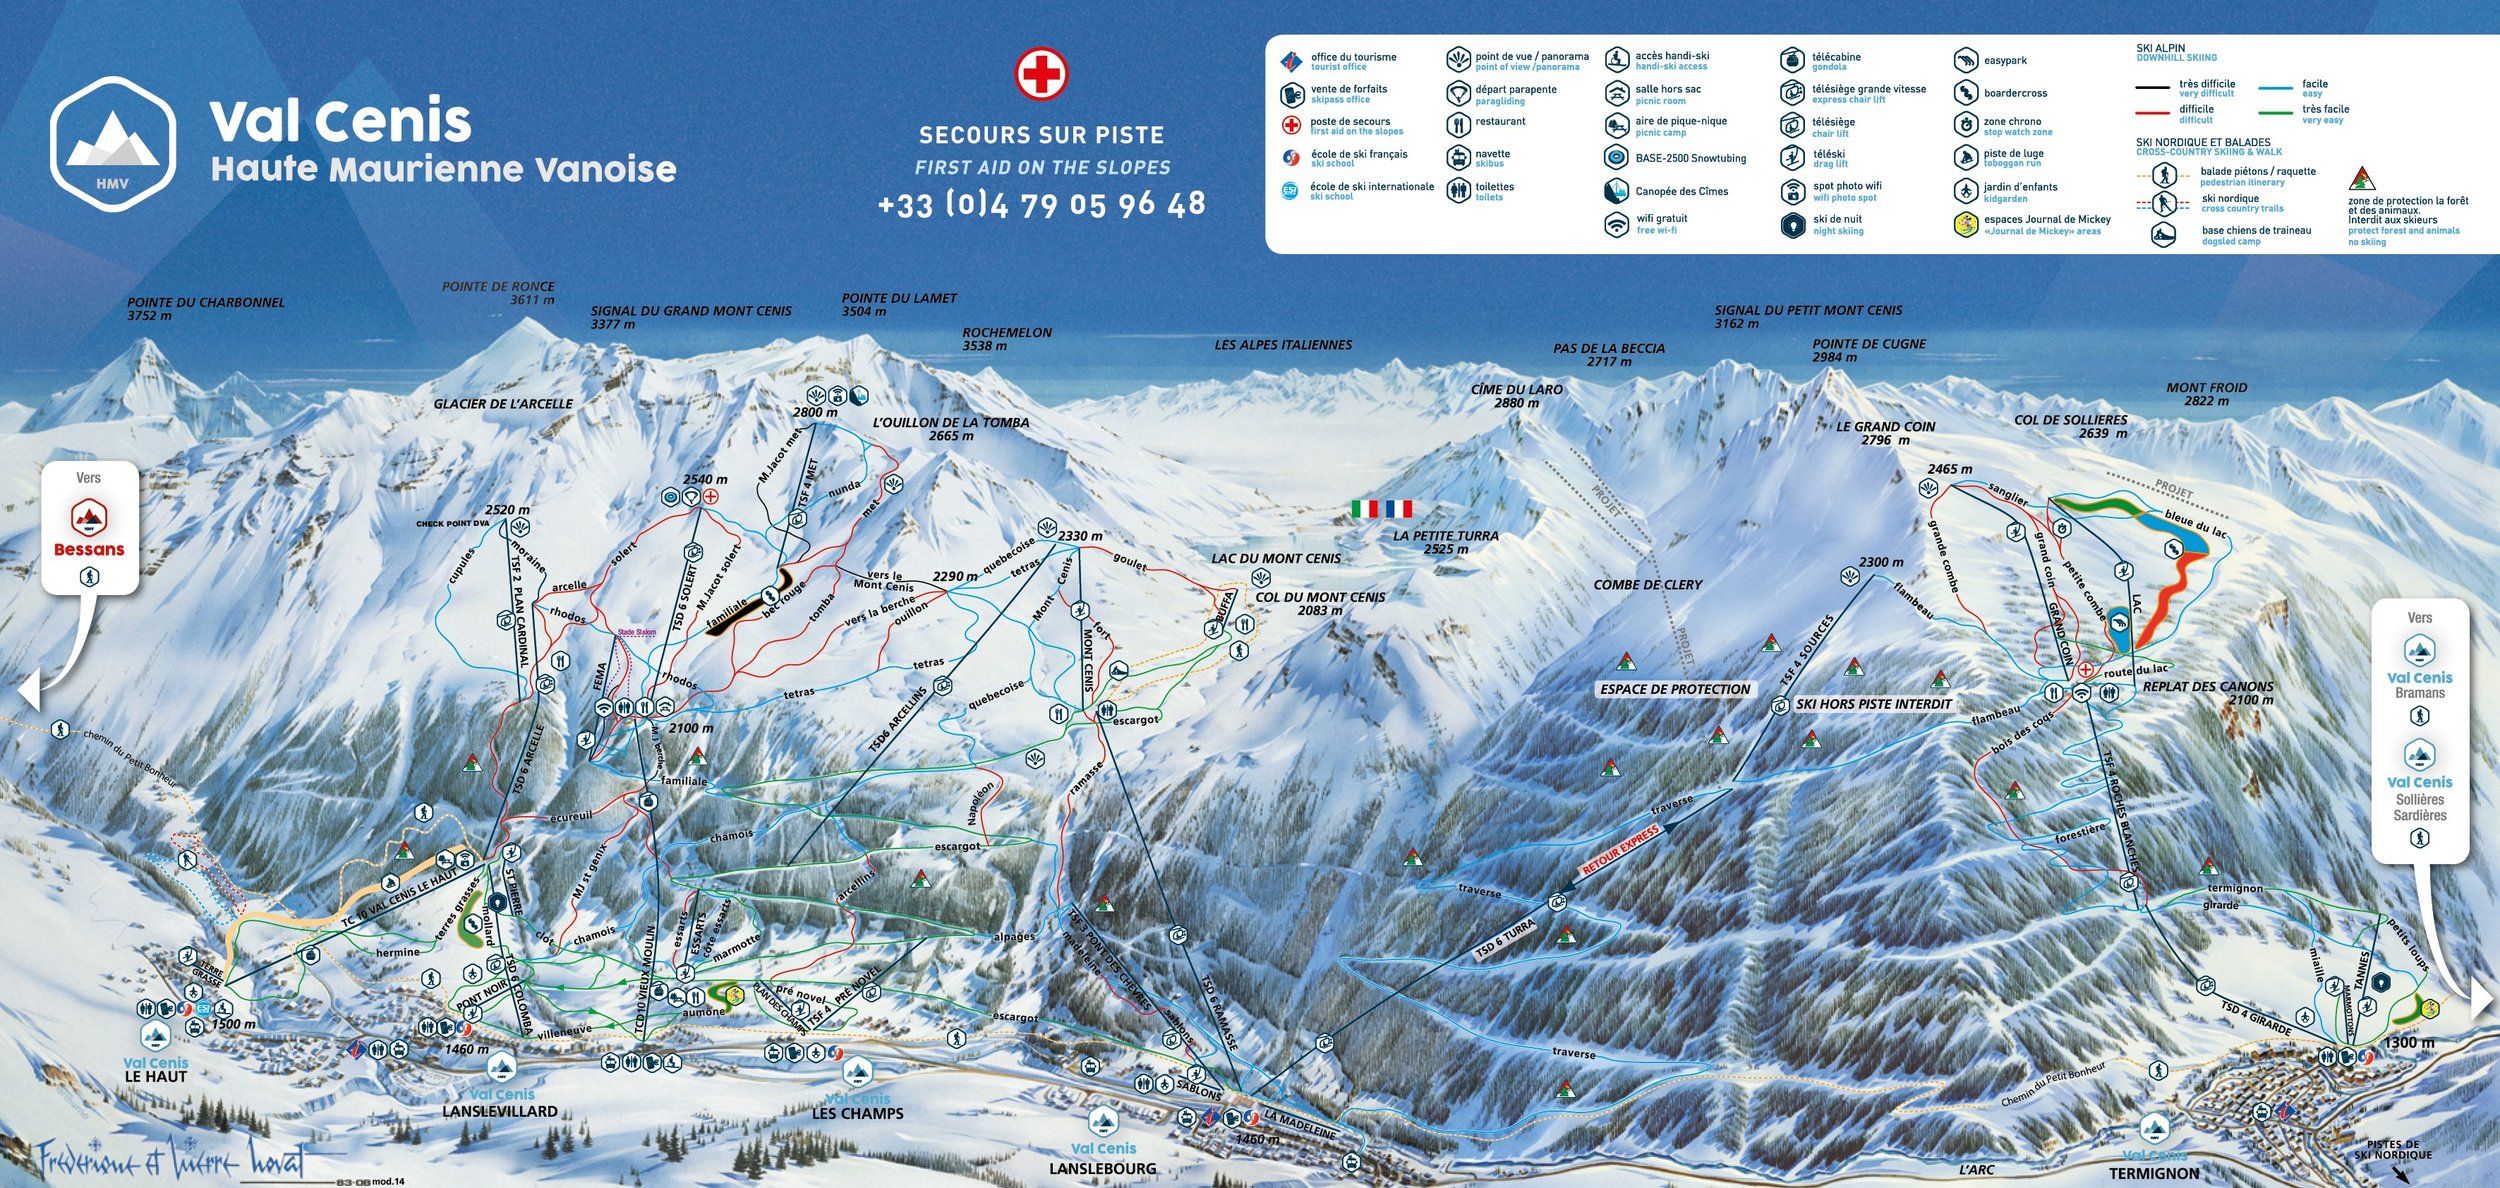 Pistenplan / Karte Skigebiet Val Cenis, 